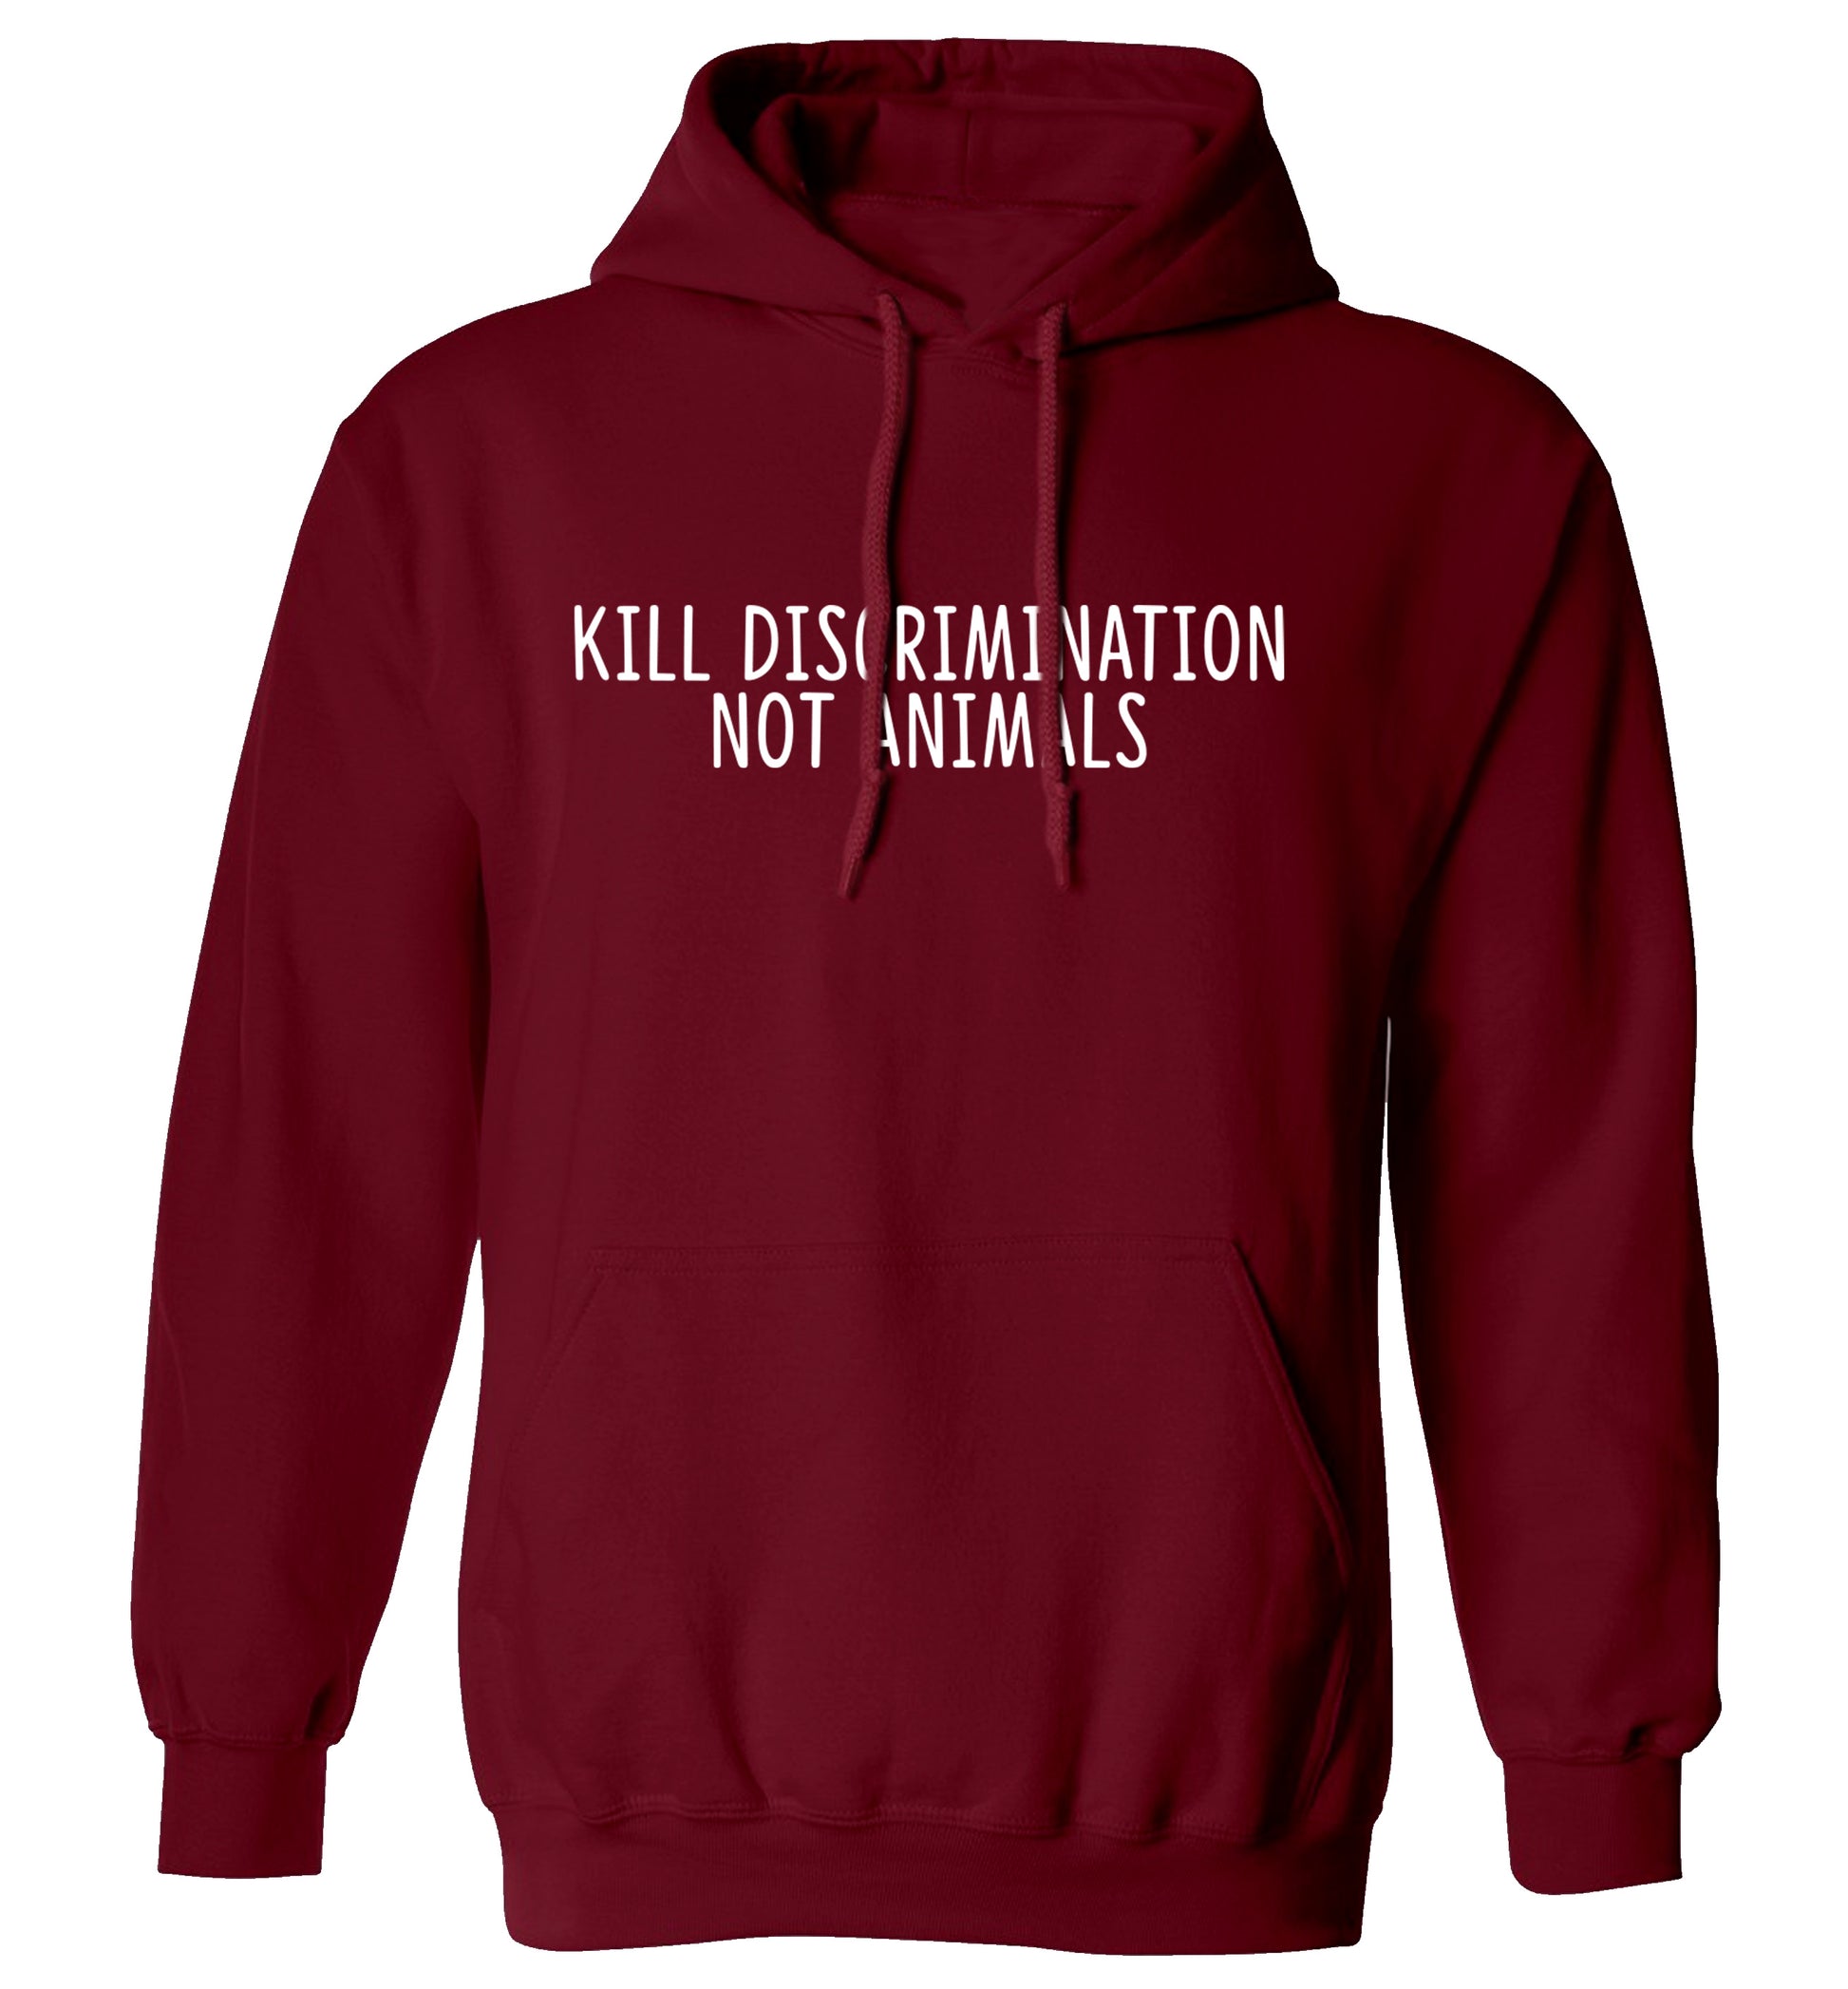 Kill Discrimination Not Animals adults unisex maroon hoodie 2XL